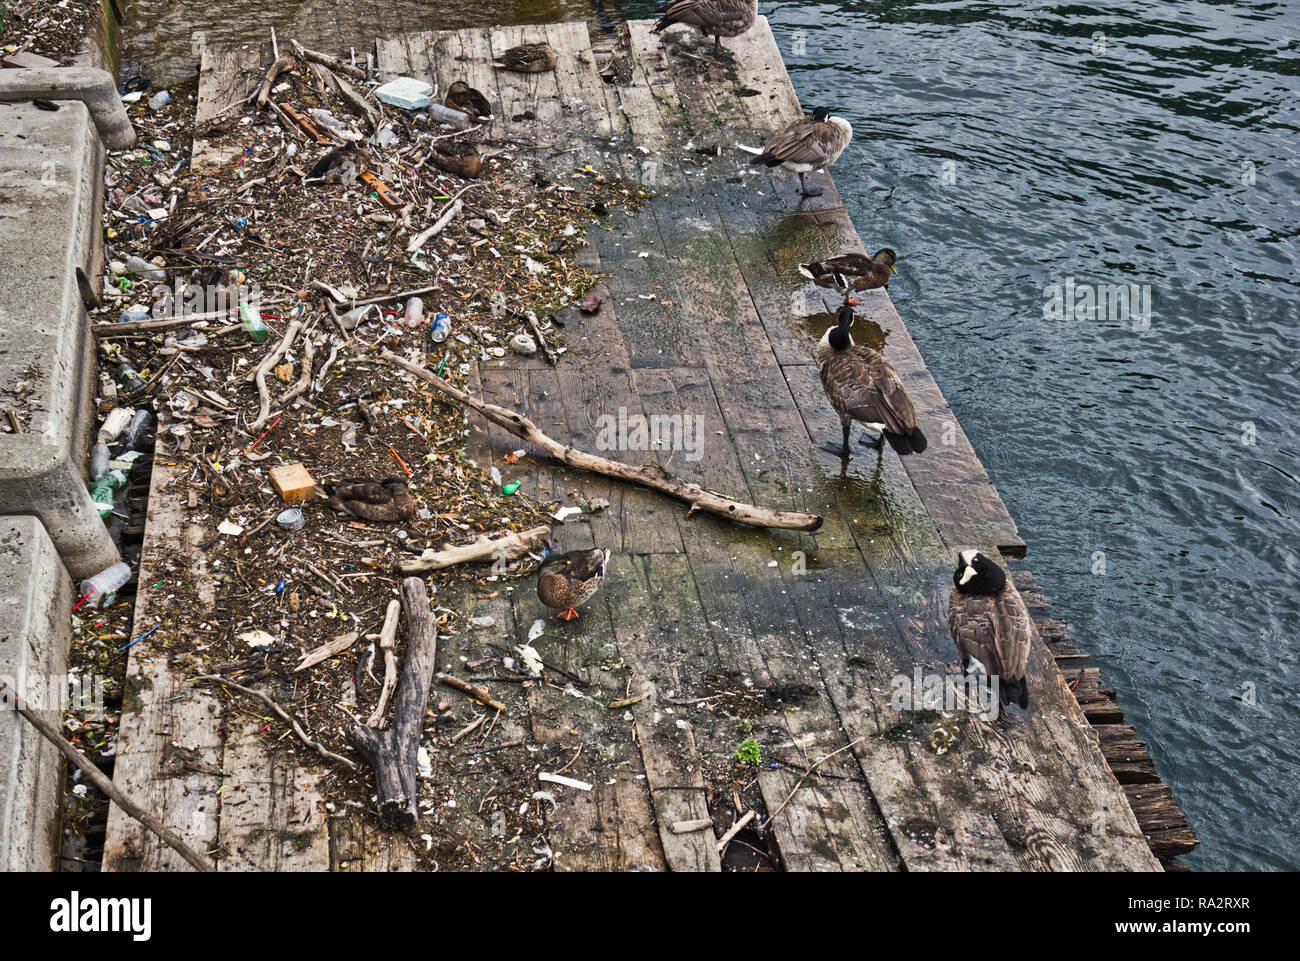 Birds on wooden platform amongst discarded plastic and other flotsam, Toronto, Ontario, Canada Stock Photo